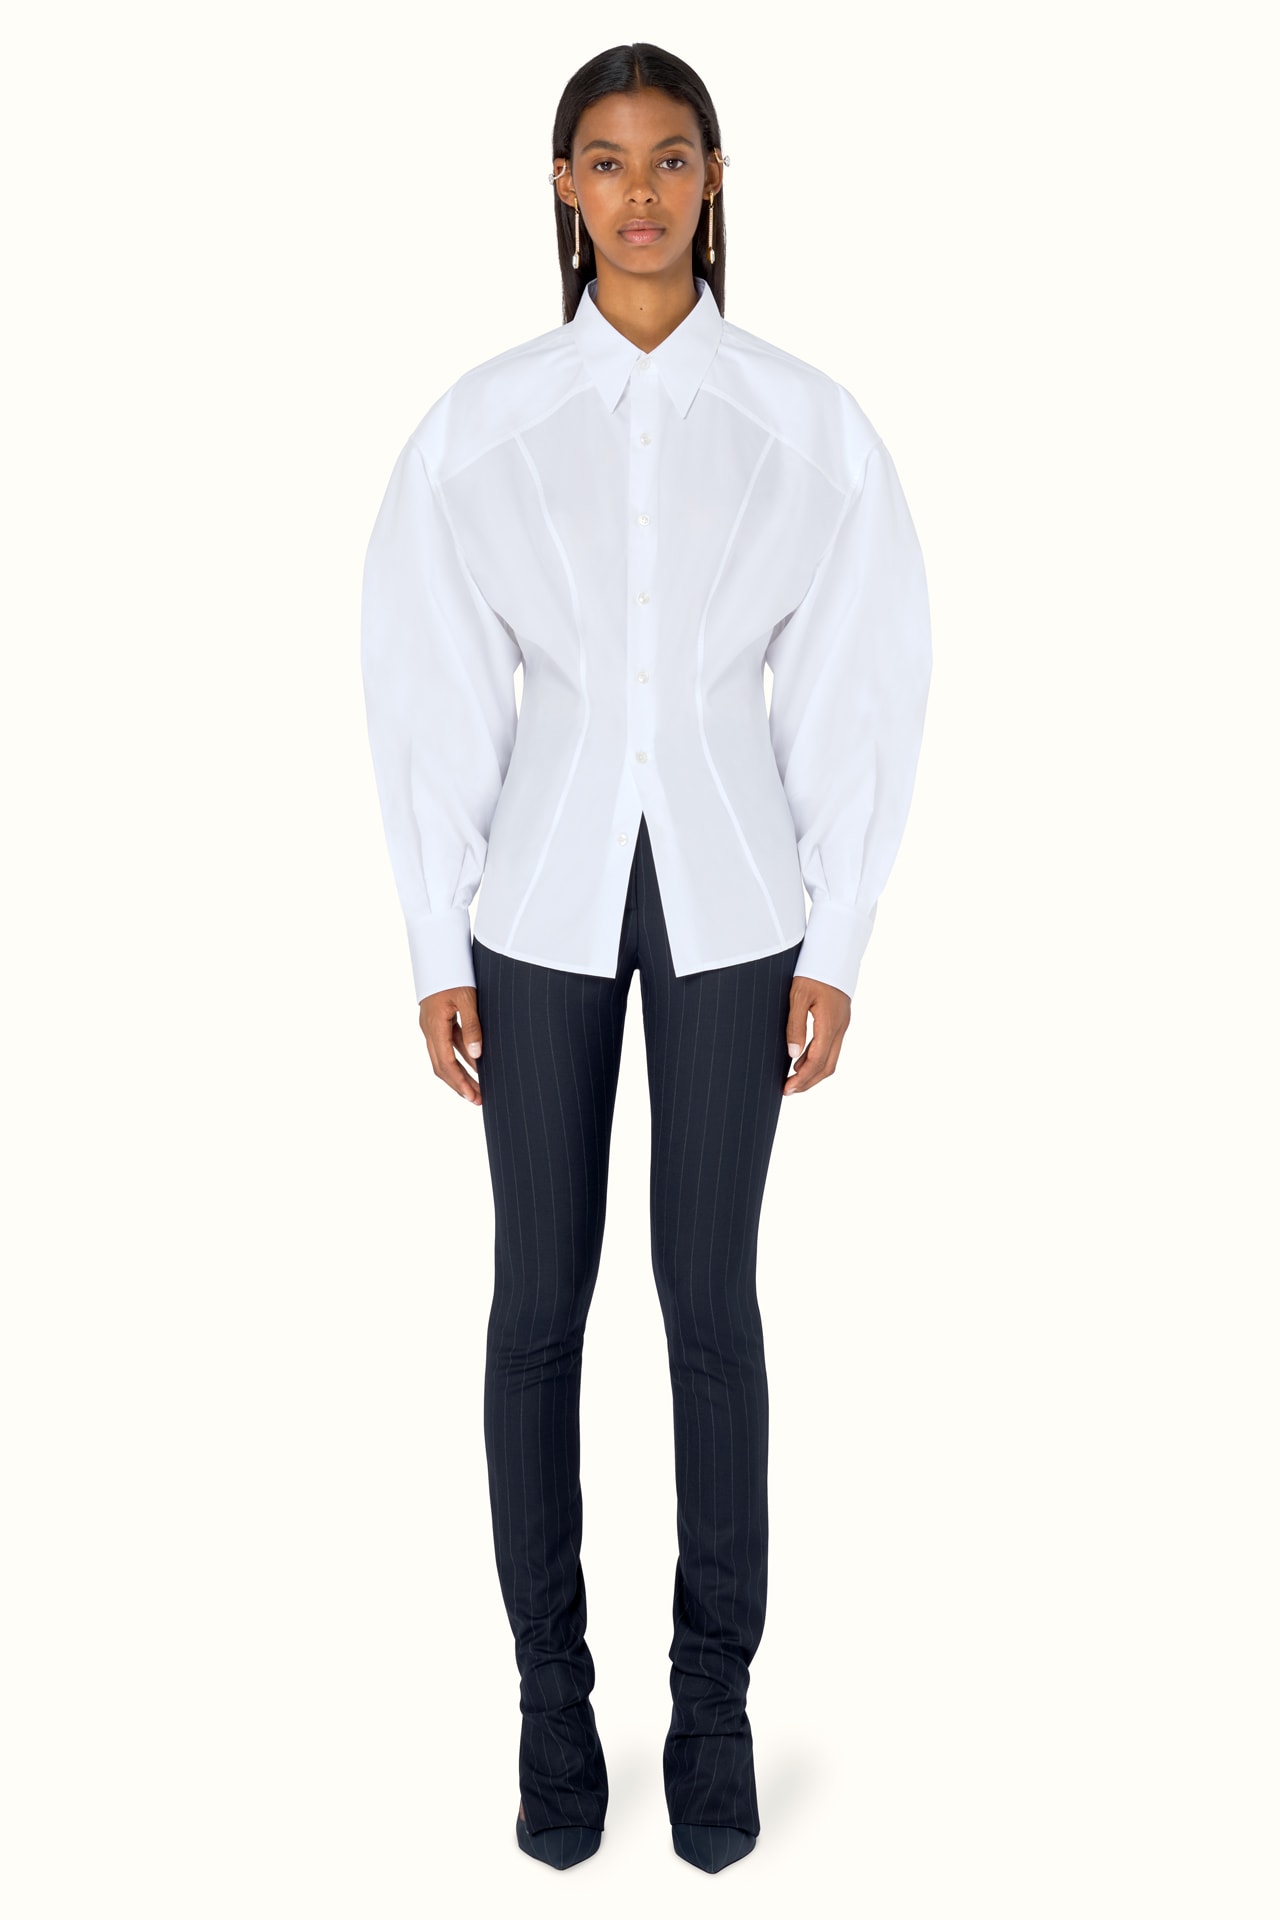 FENTY Rihanna Release 9-19 Collection Lookbook Shirt White Pants Black